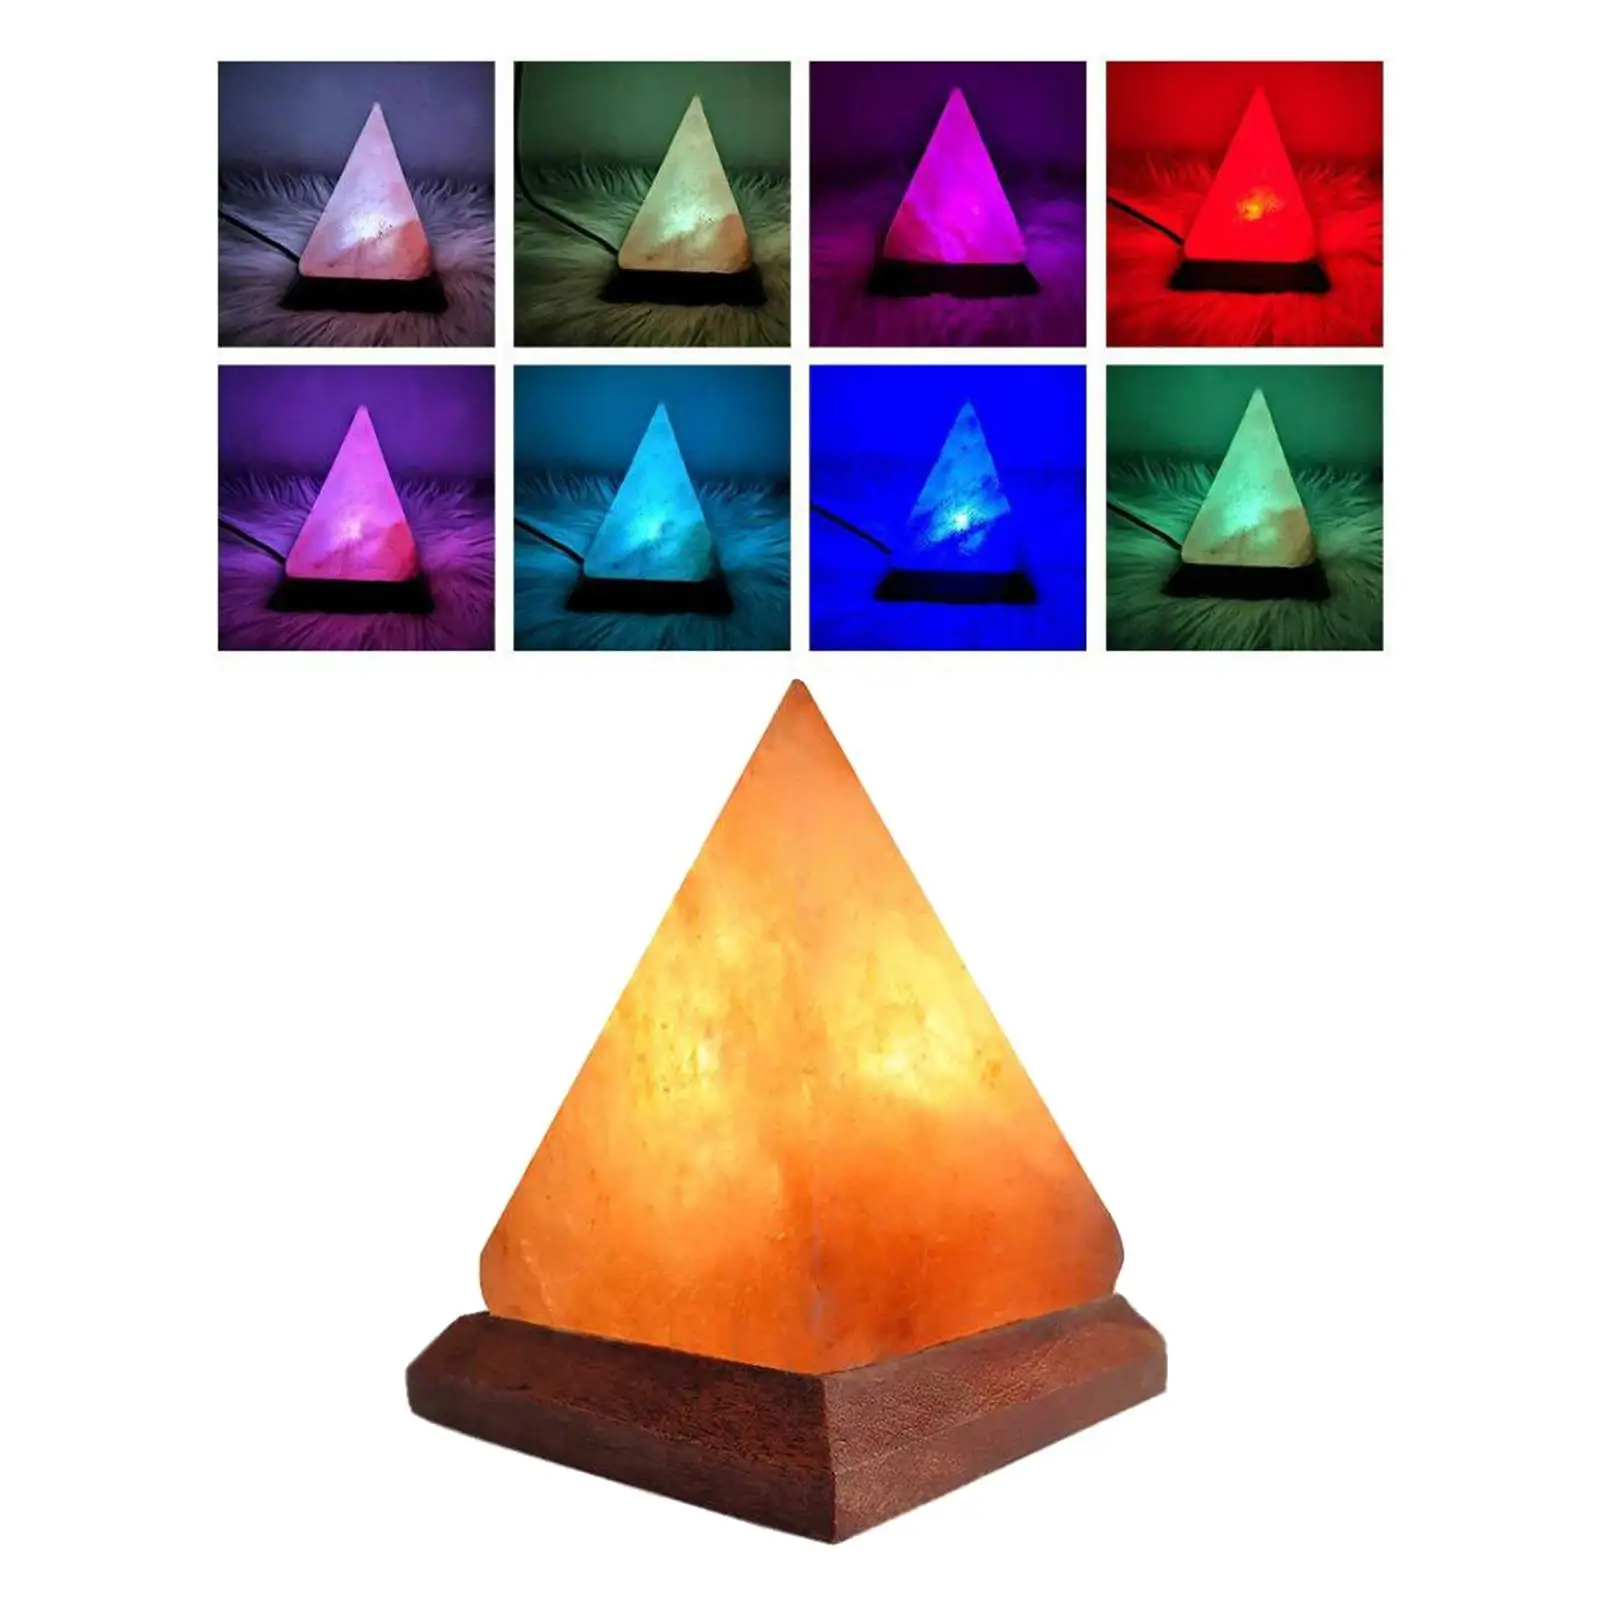 Portable Salt Lamp, Color Changing USB Wooden Cord Night Light for Restaurant Bedroom Desk